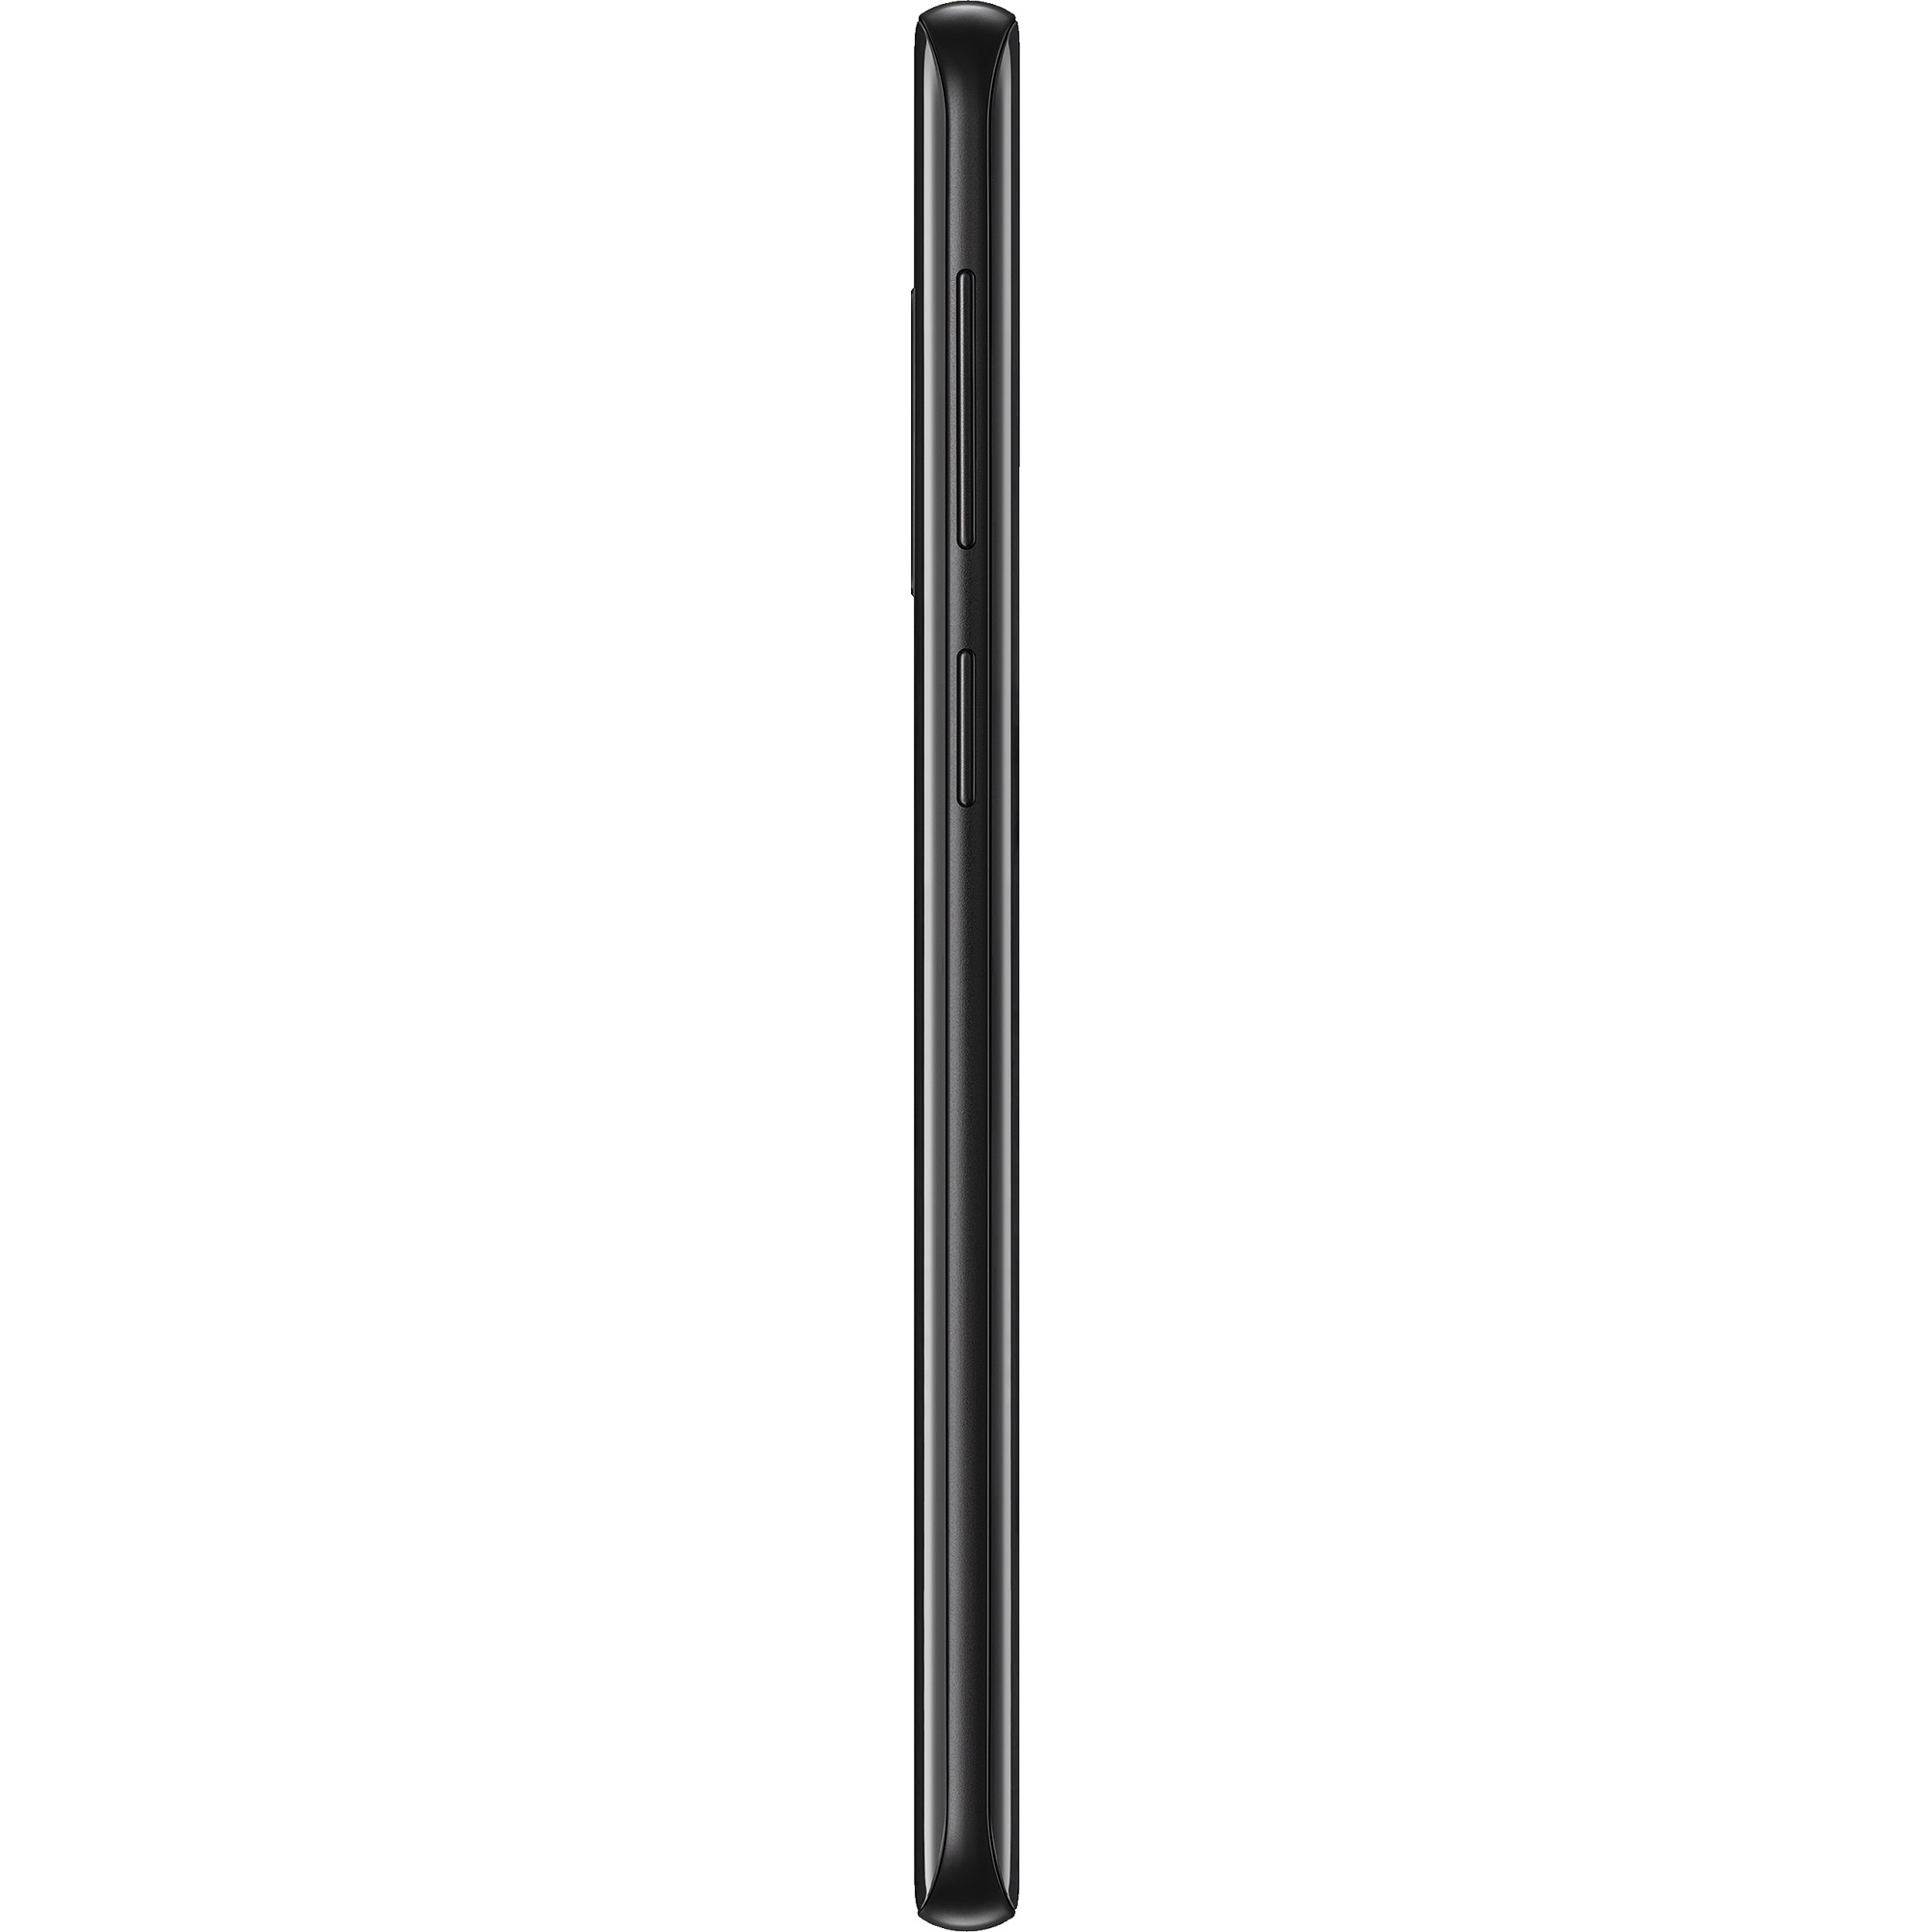 SAMSUNG Galaxy S9 G960U 64GB GSM Unlocked (USA Version) - Midnight Black (Used) + Liquid Nano Screen Protector - image 4 of 5